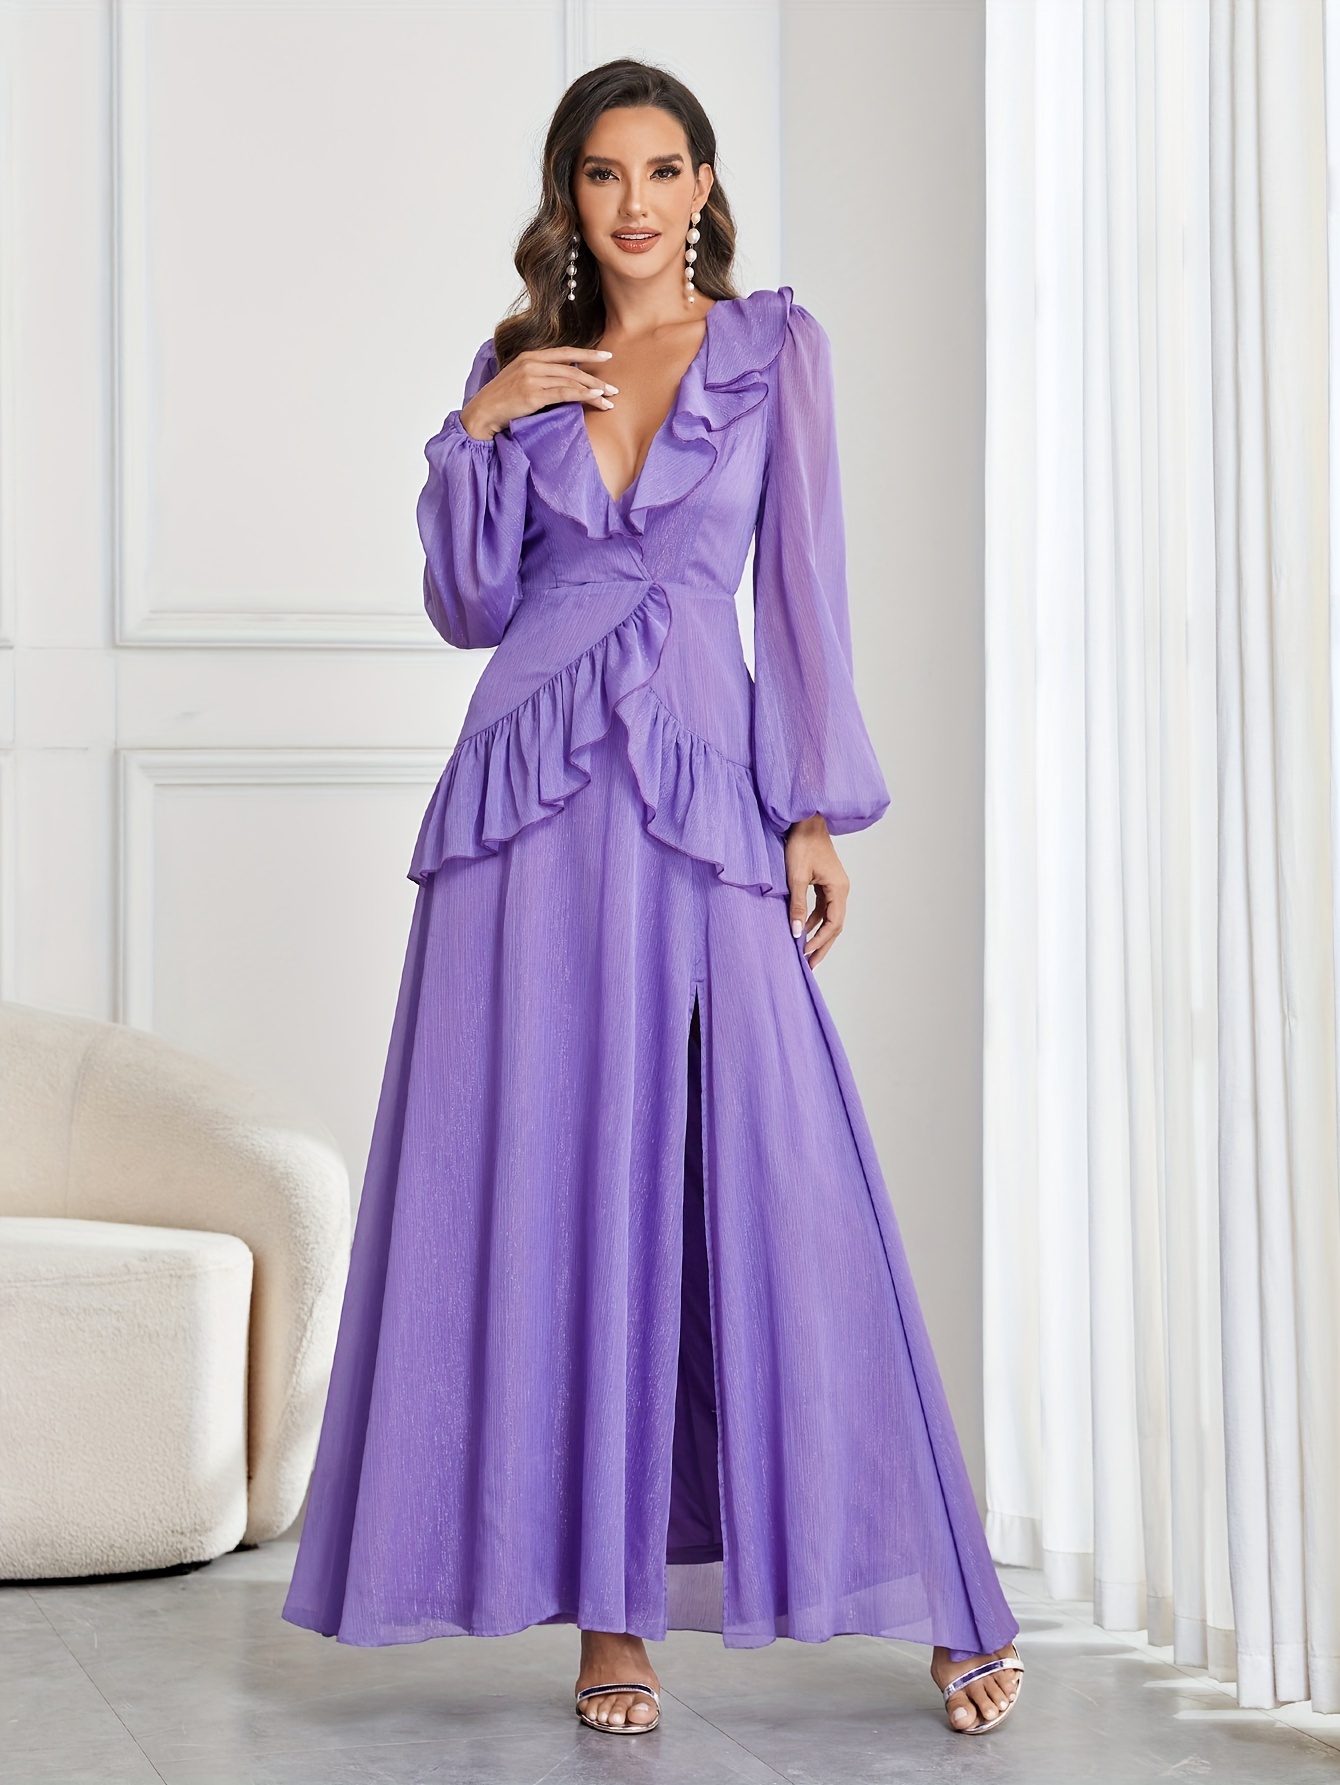 Sexy Solid Elegant V Neck Wedding Dress, High Neck High Split Long Sleeve  Cocktail Party Dress, Women's Clothing